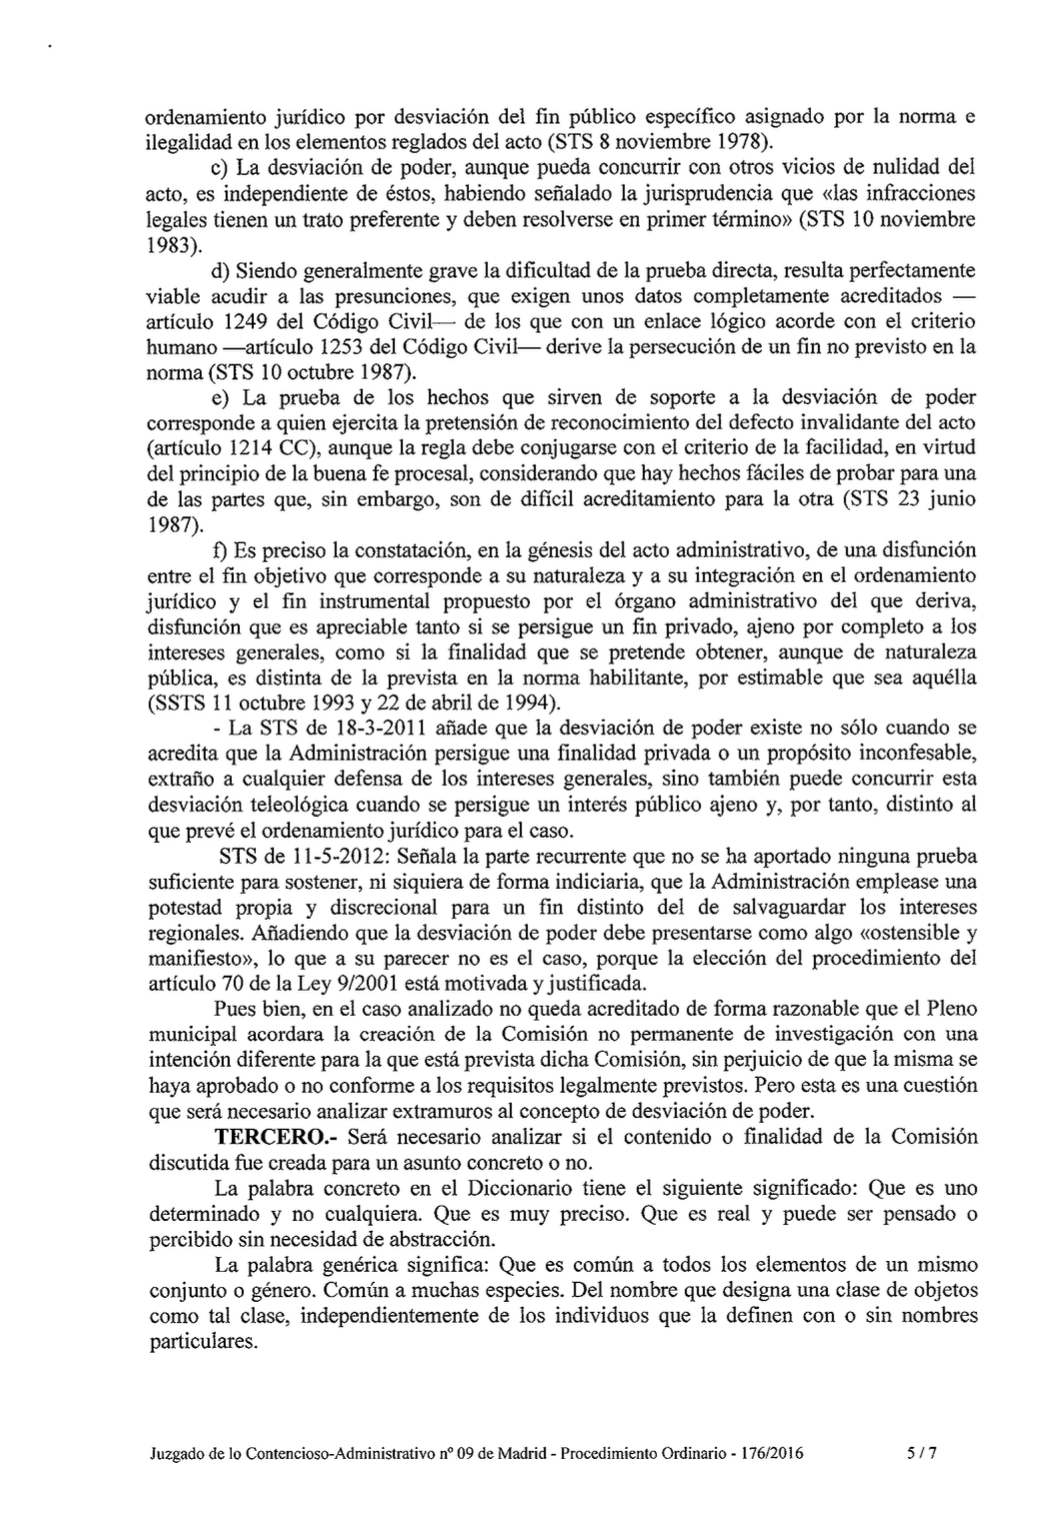 Comision-Anti-PP-Ilegal-Carmena-5.png